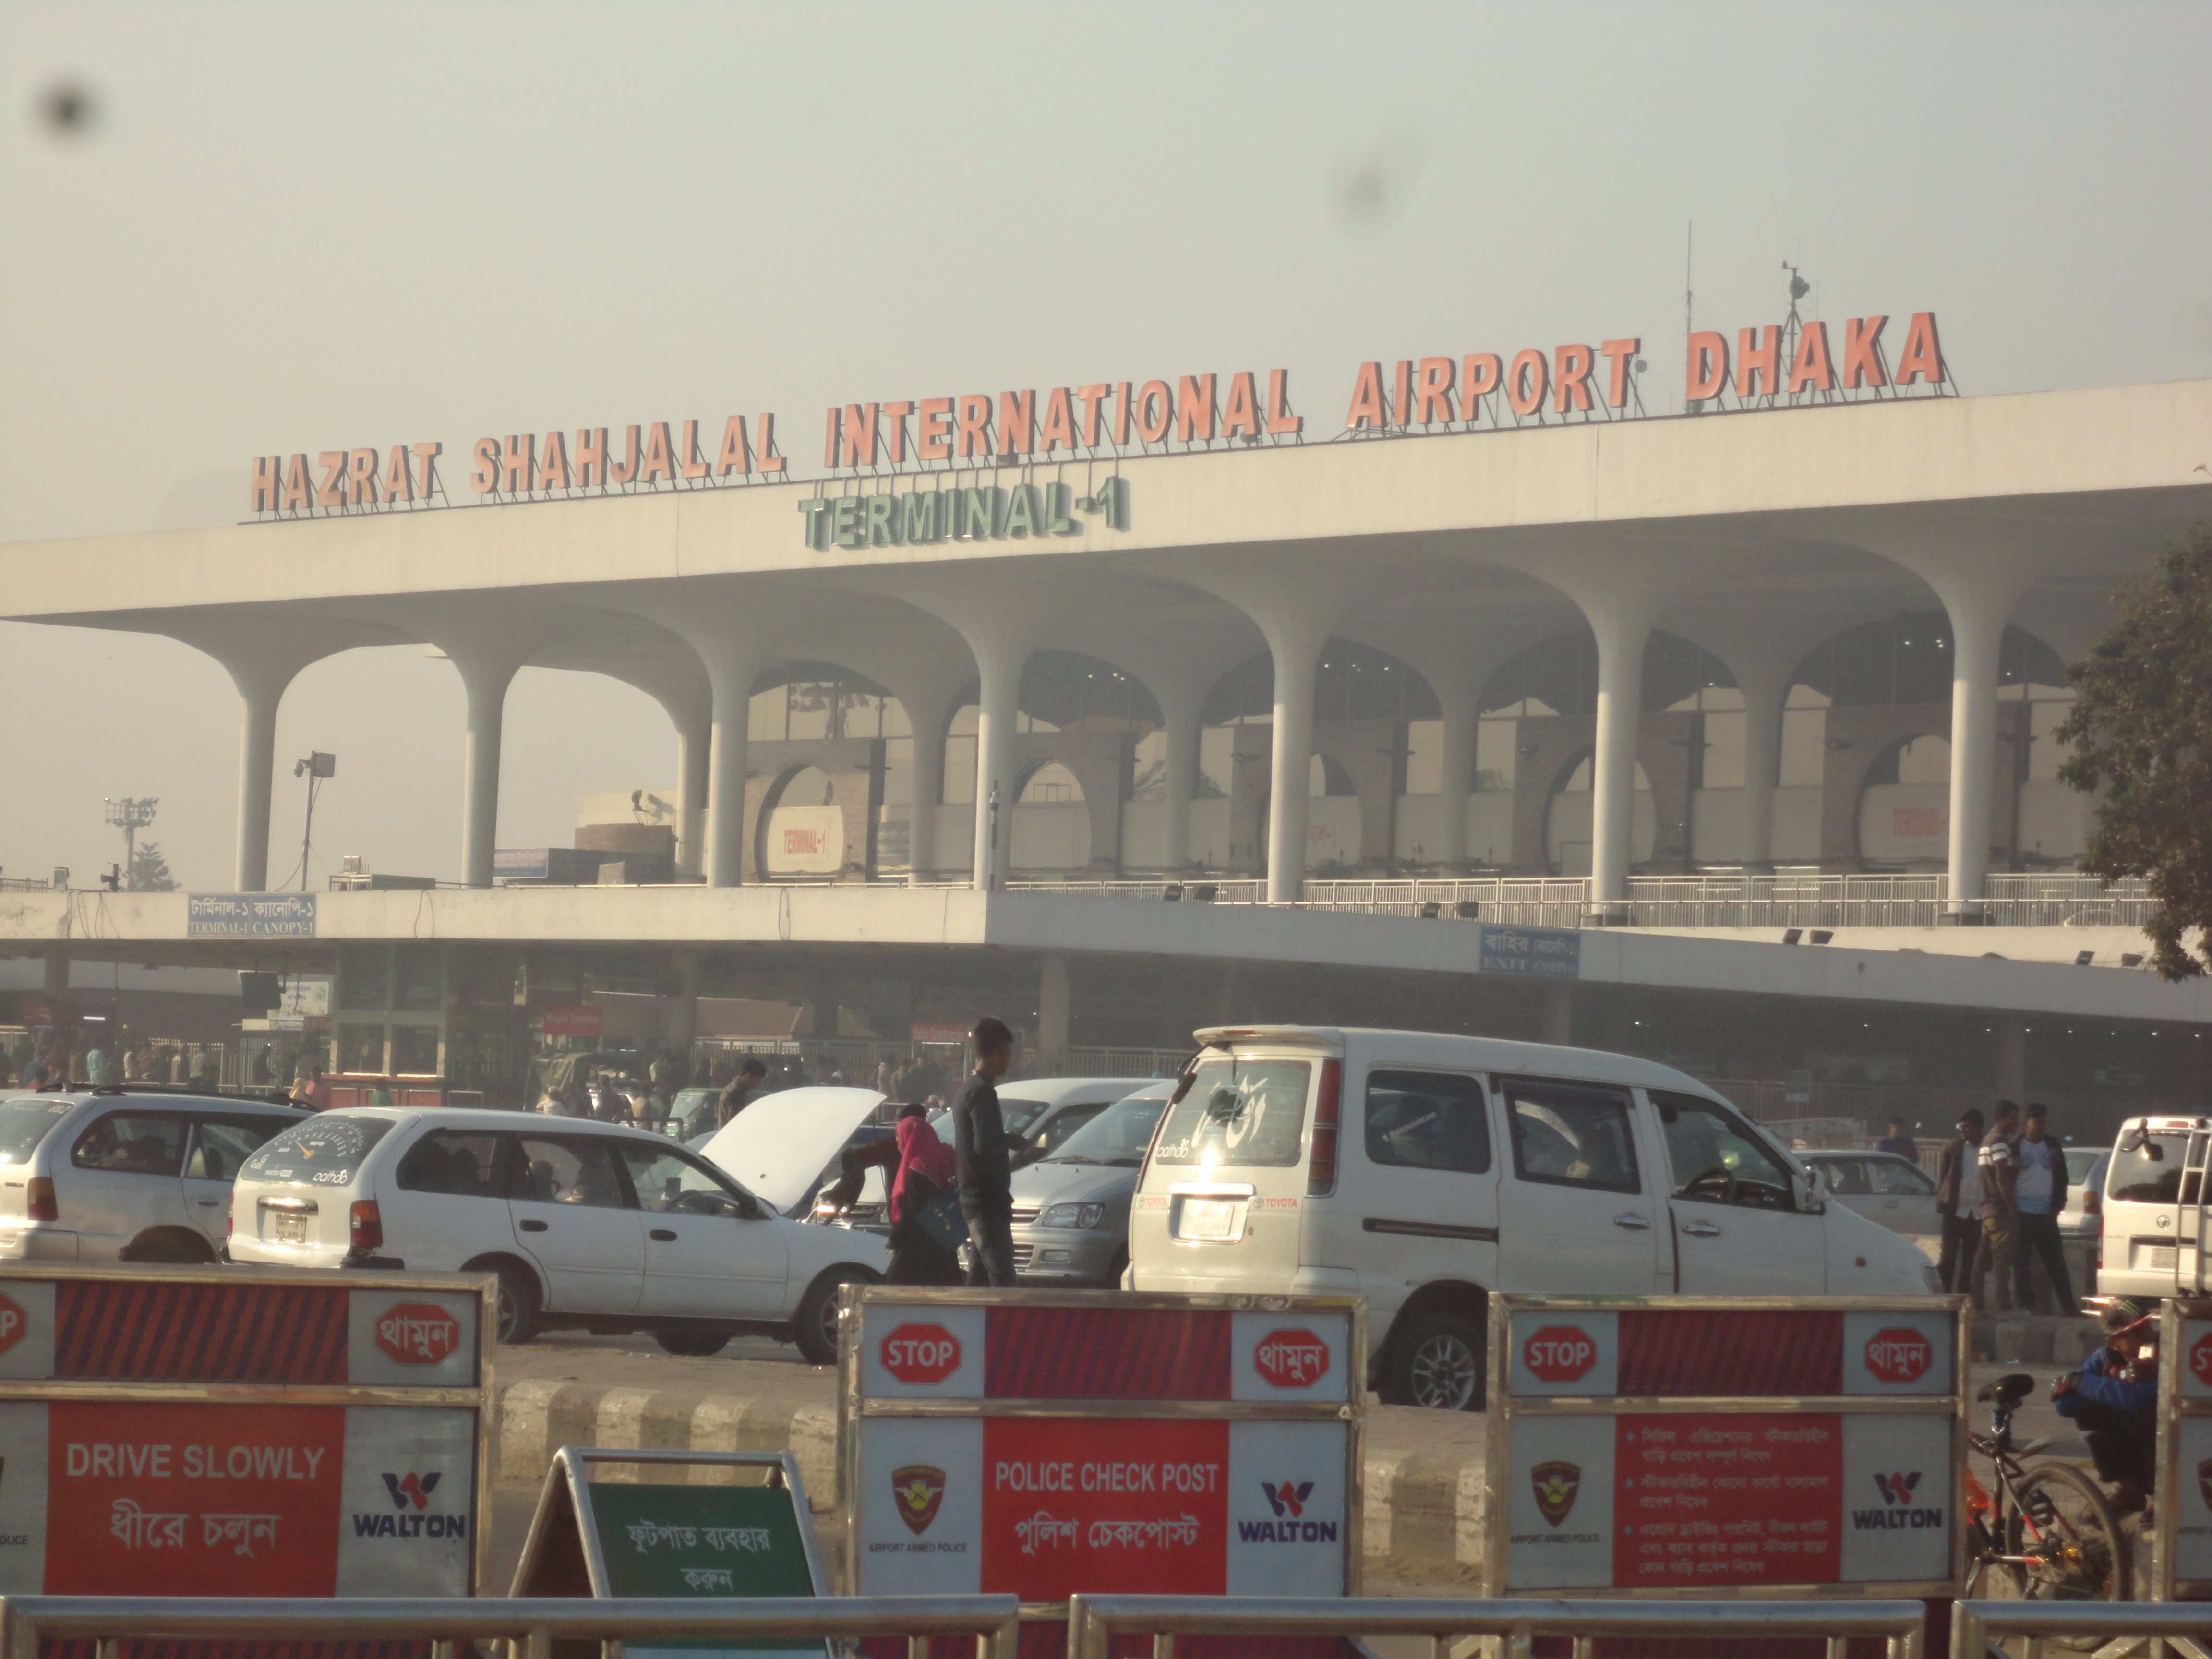 Hazrat Shahjalal International Airport